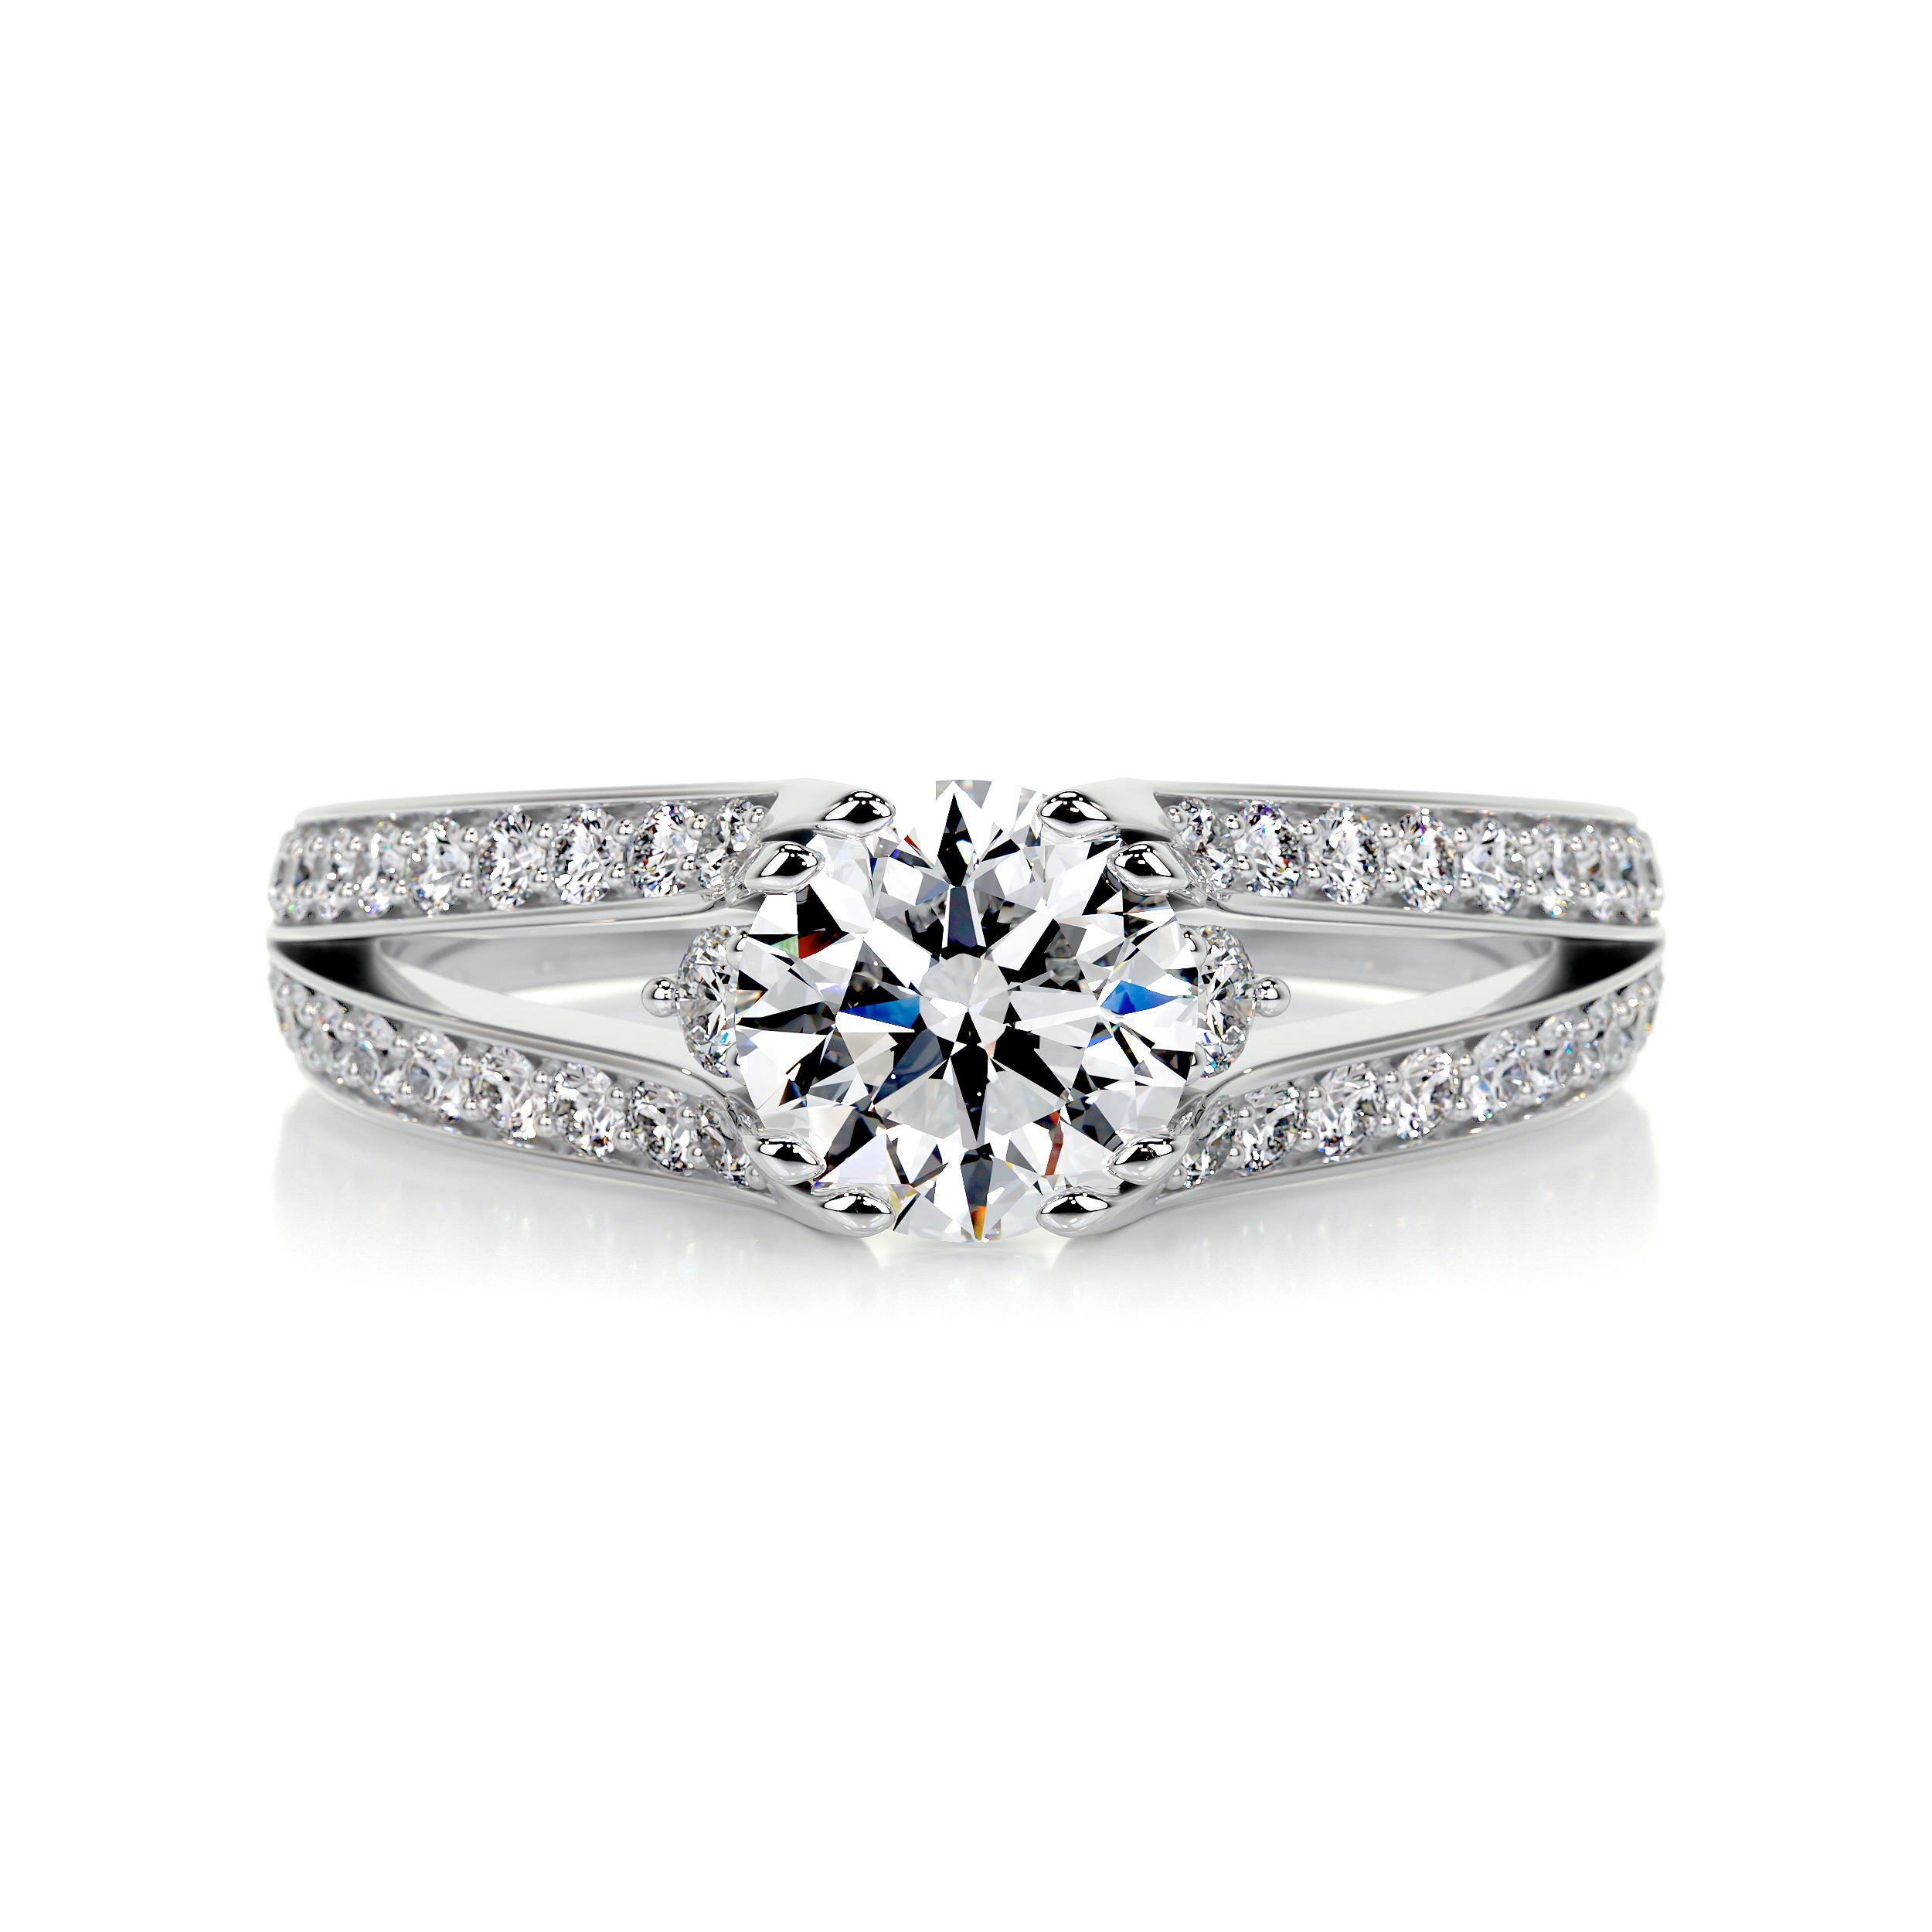 Alex Diamond Engagement Ring   (1.5 Carat) -14K White Gold